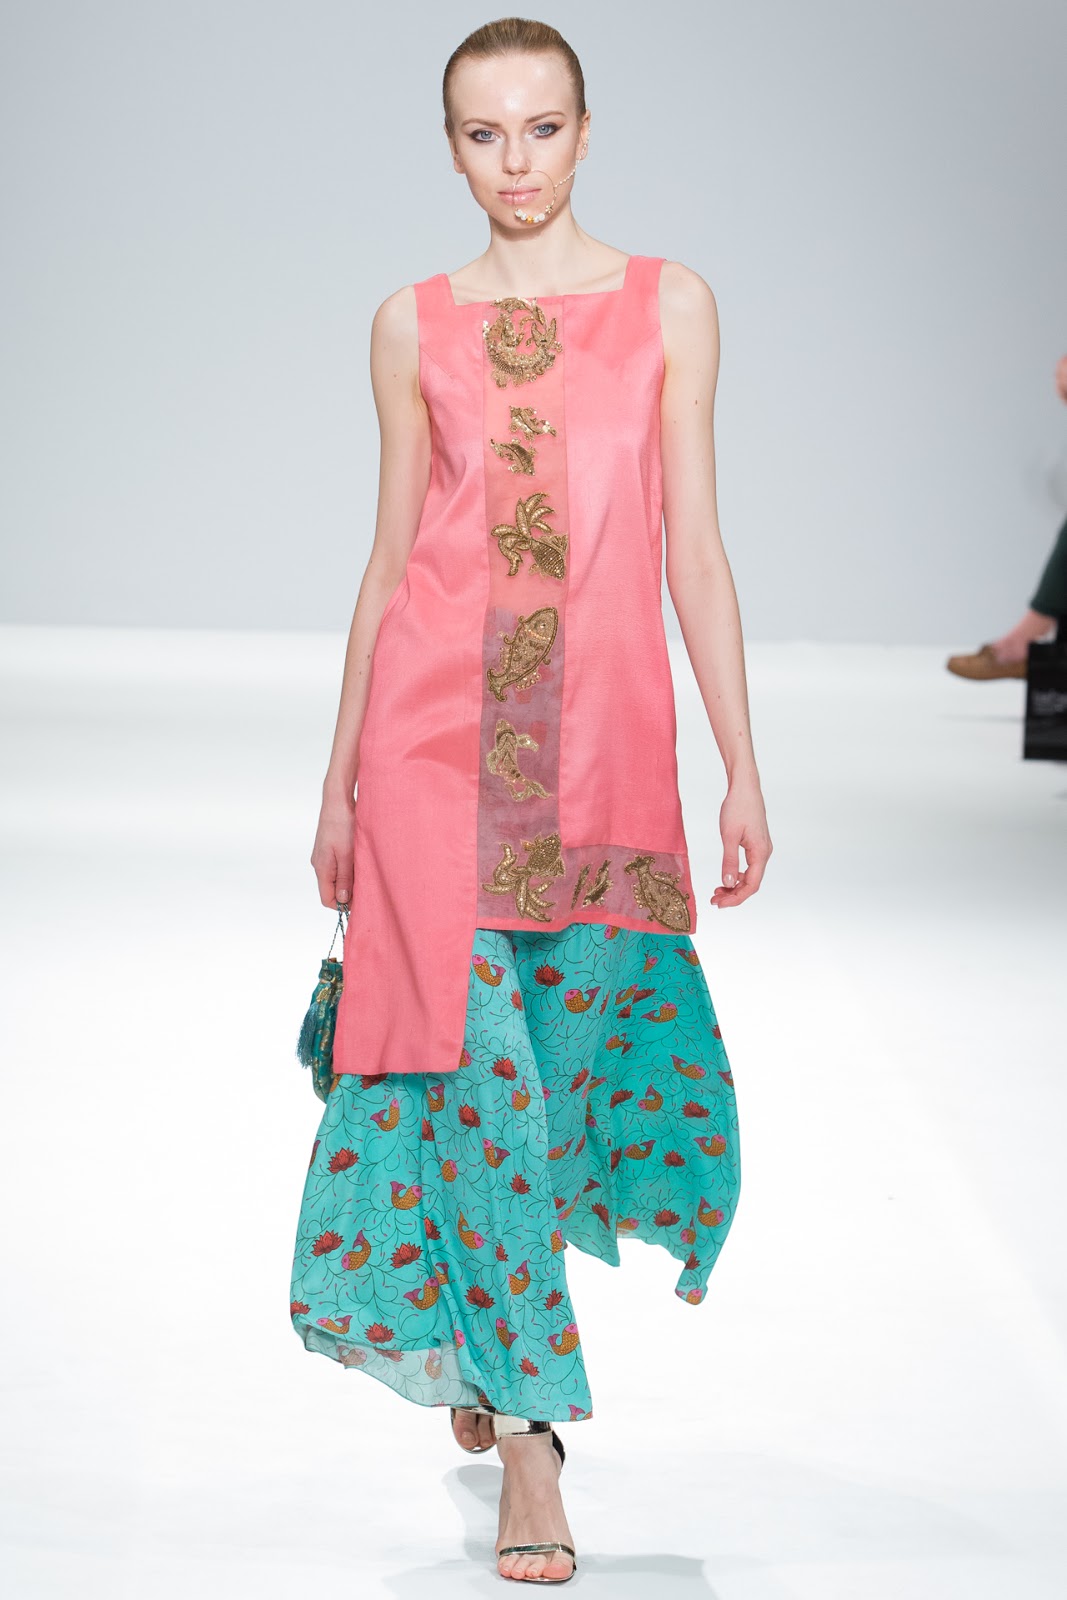 frumpy to funky: Fashion DNA Pakistan presents The Pink Tree Company AW17